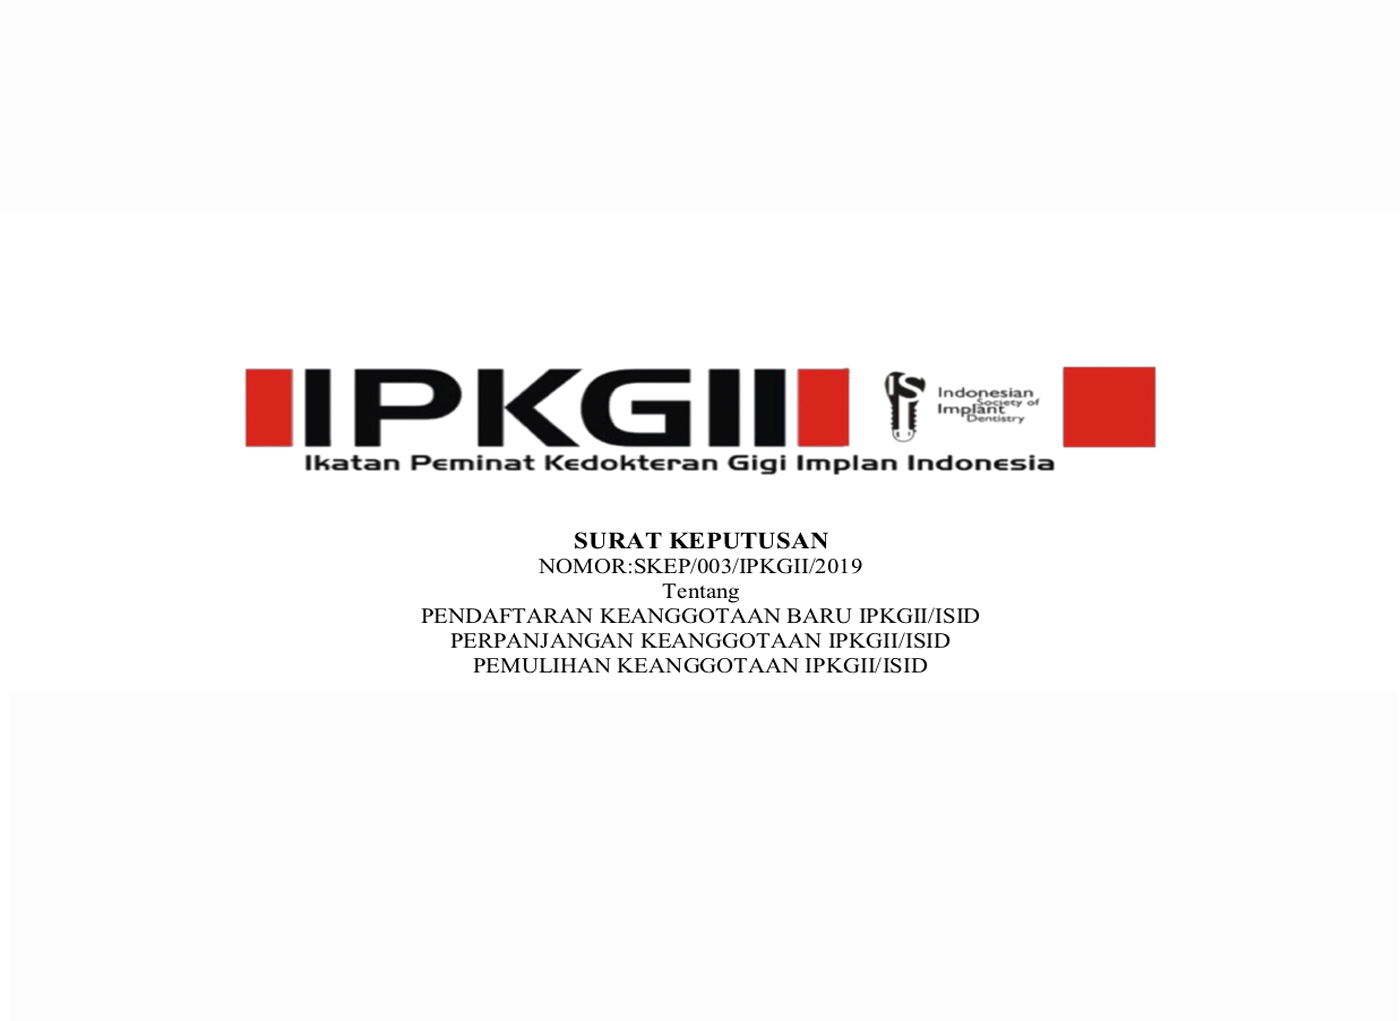 SURAT KEPUTUSAN SKEP/003/IPKGII/2019